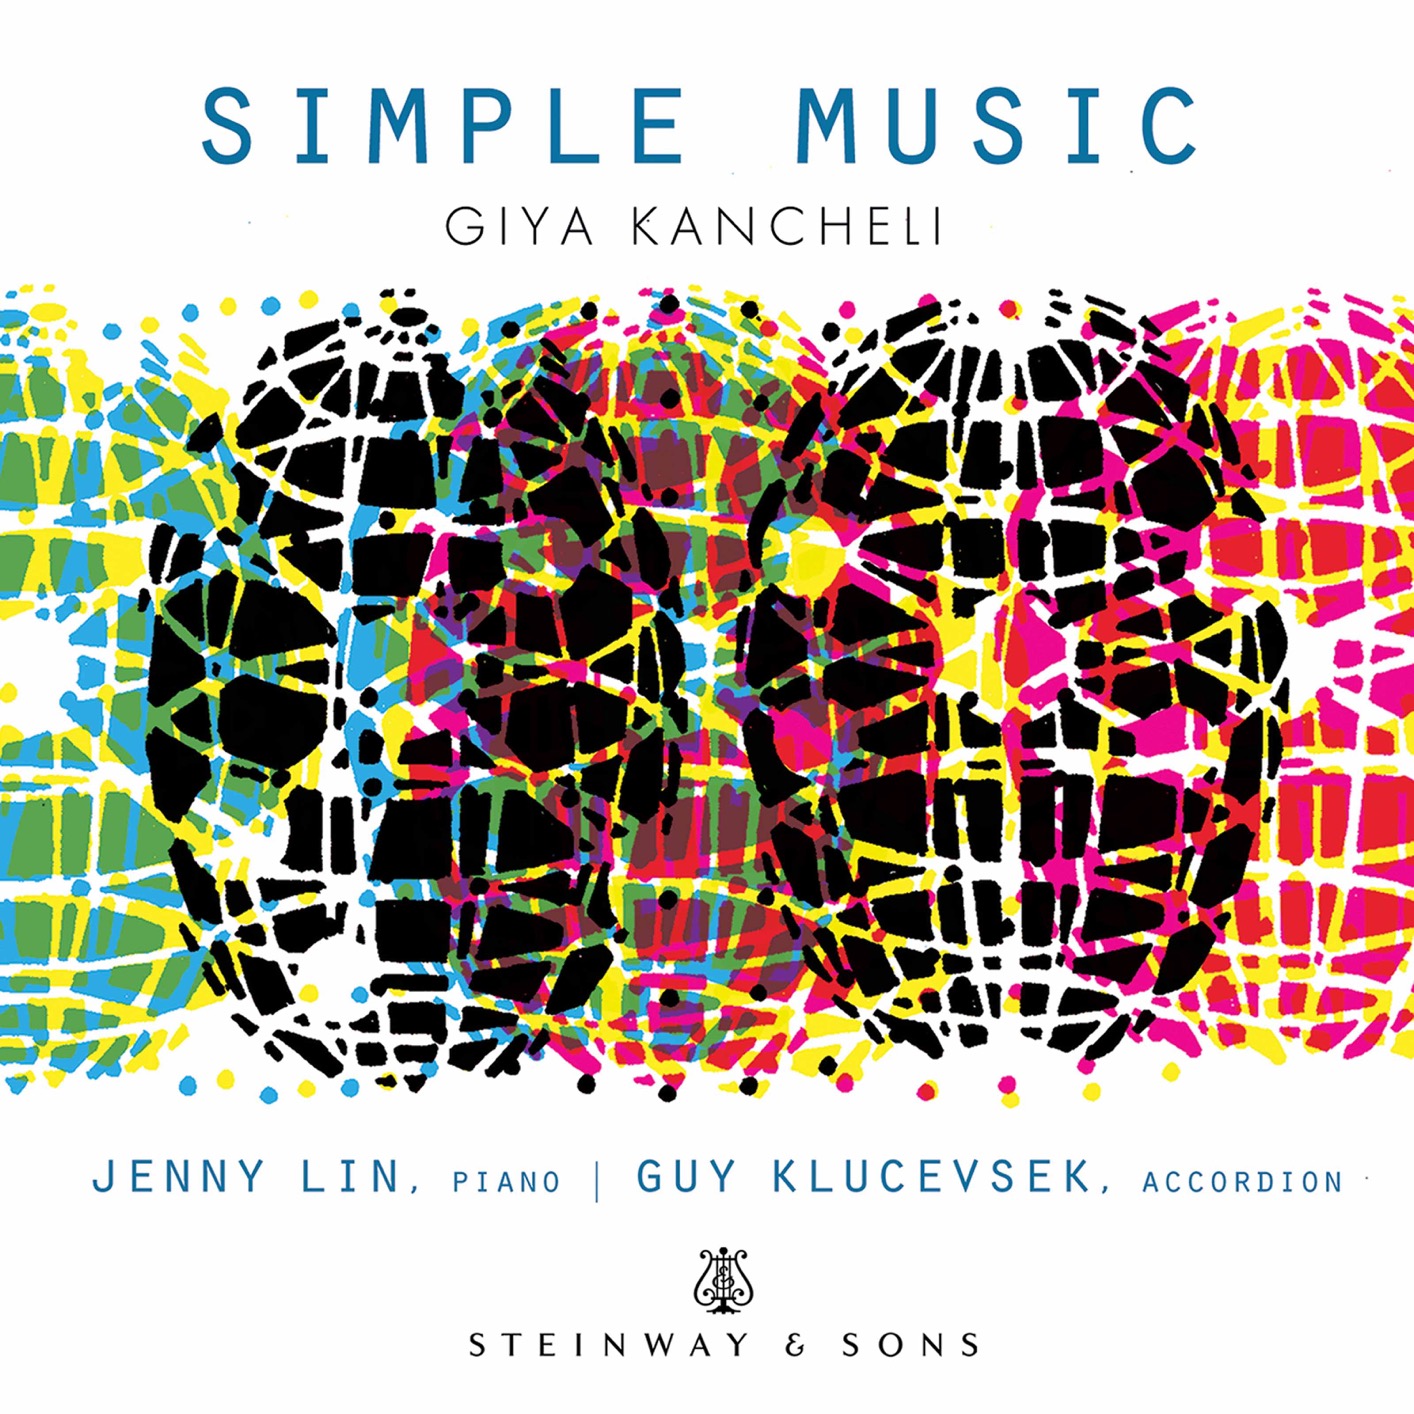 Jenny Lin & Guy Klucevsek – Kancheli – Simple Music (2021) [FLAC 24bit/192kHz]